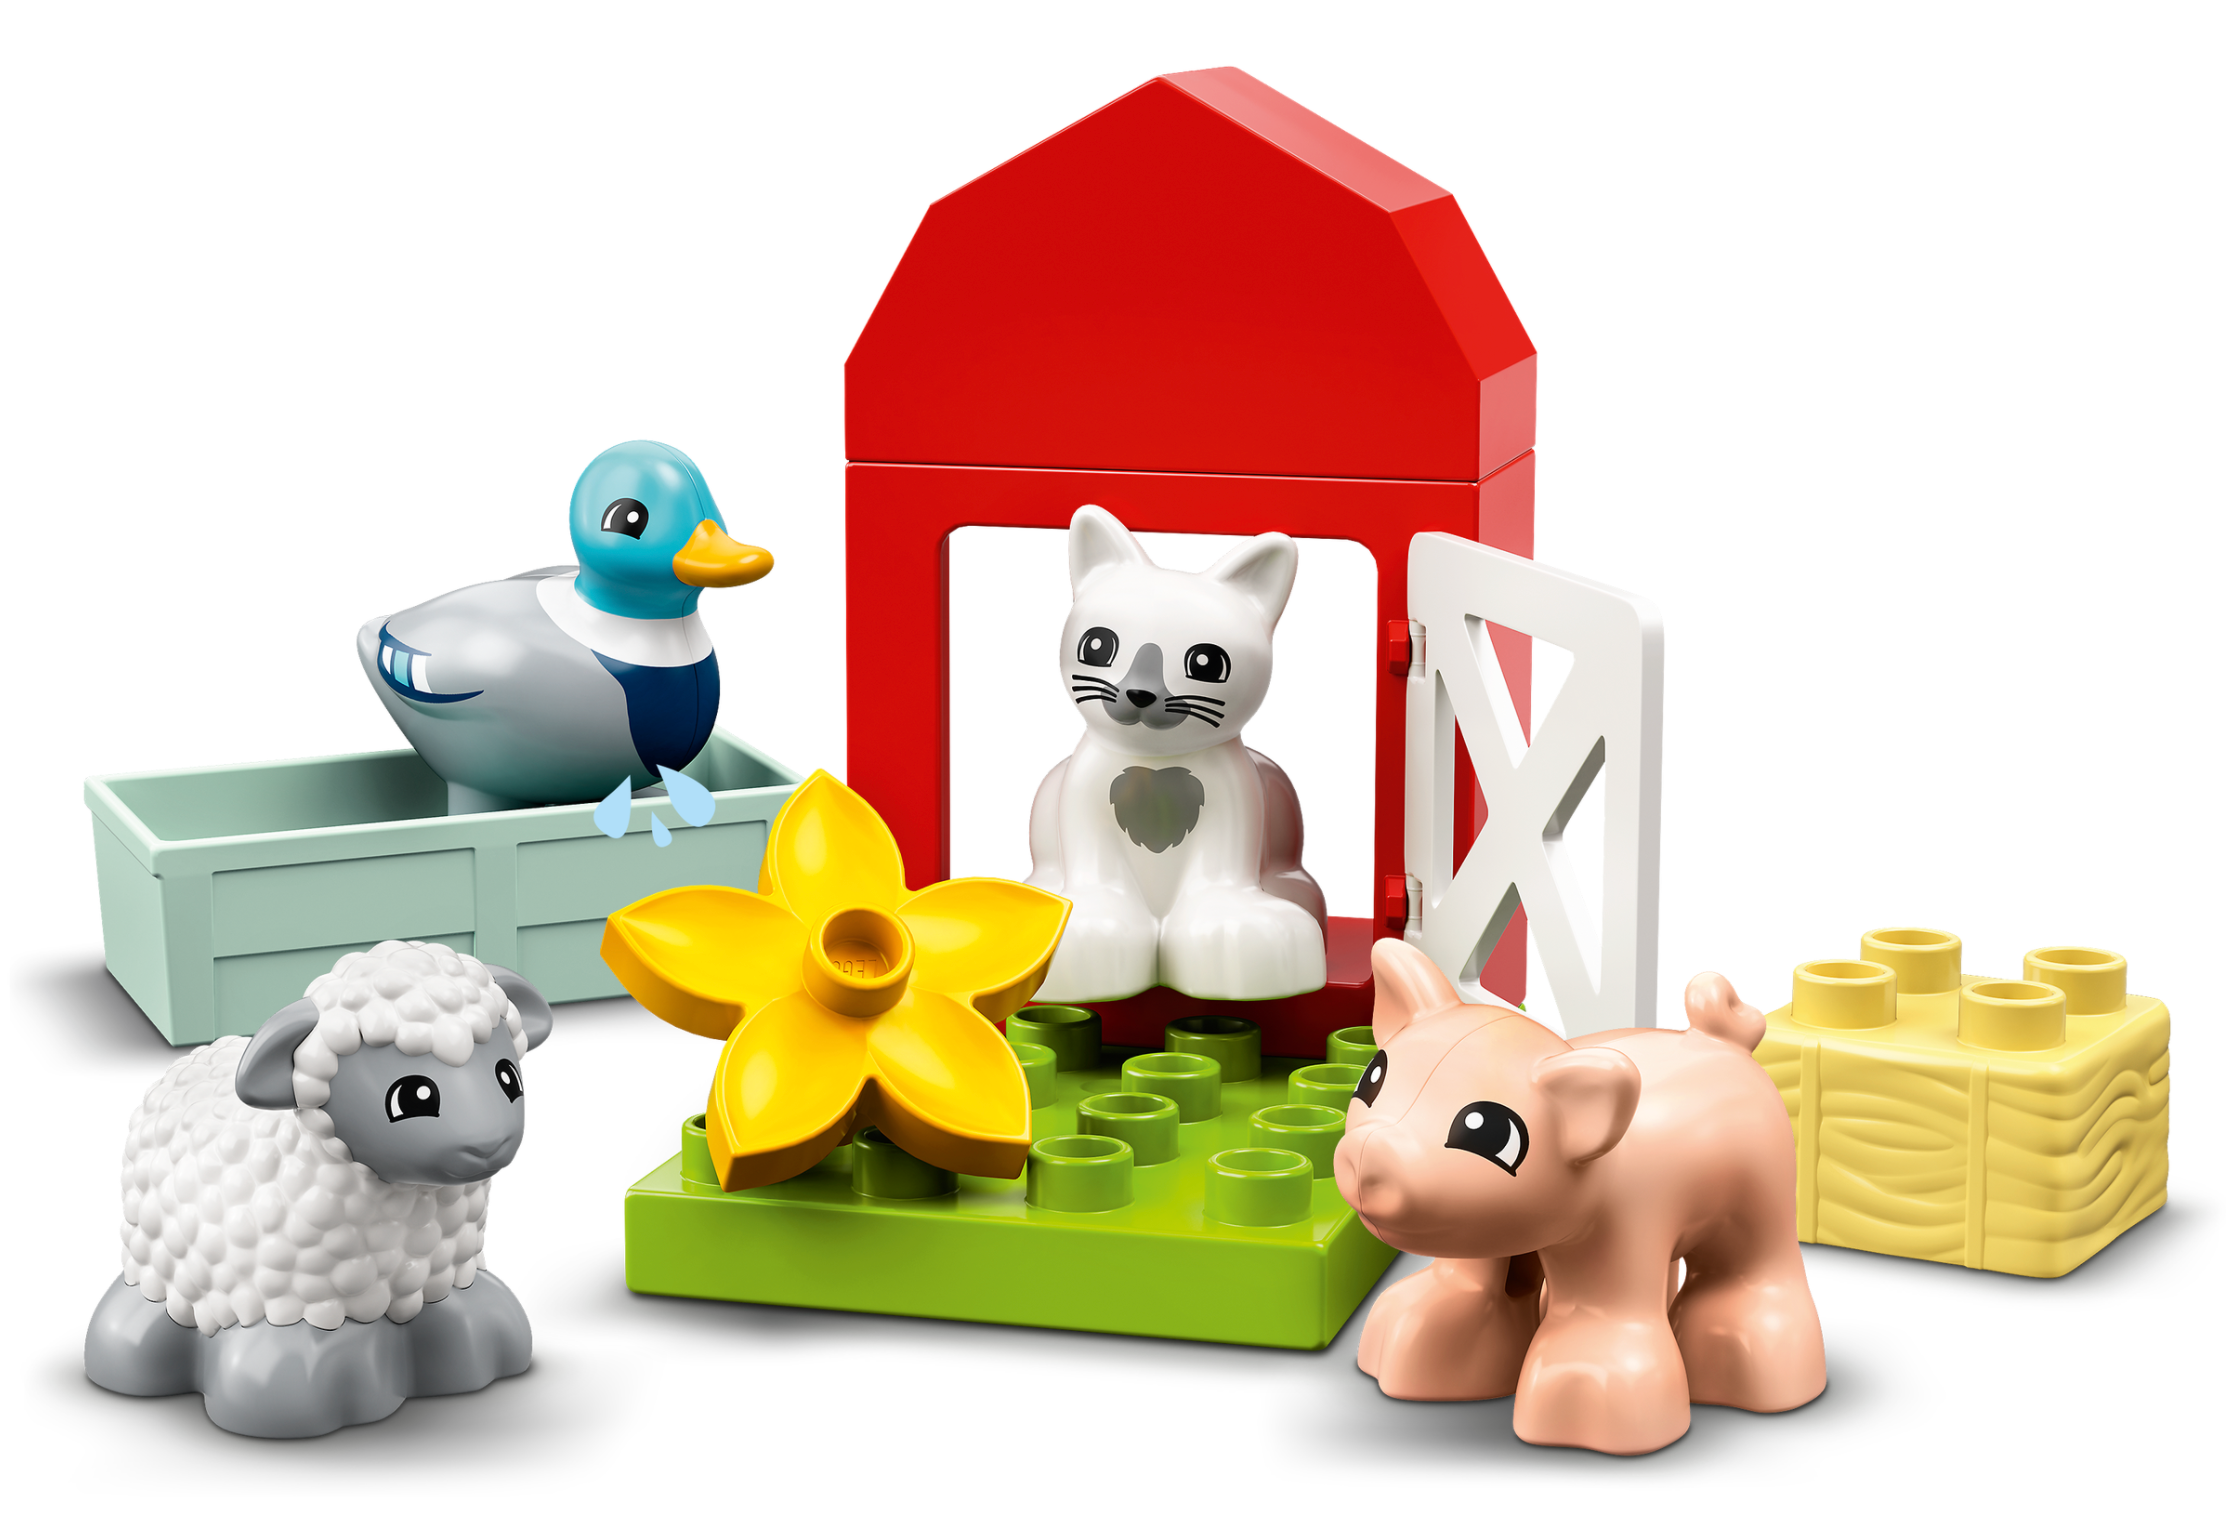 LEGO: DUPLO - Farm Animal Care